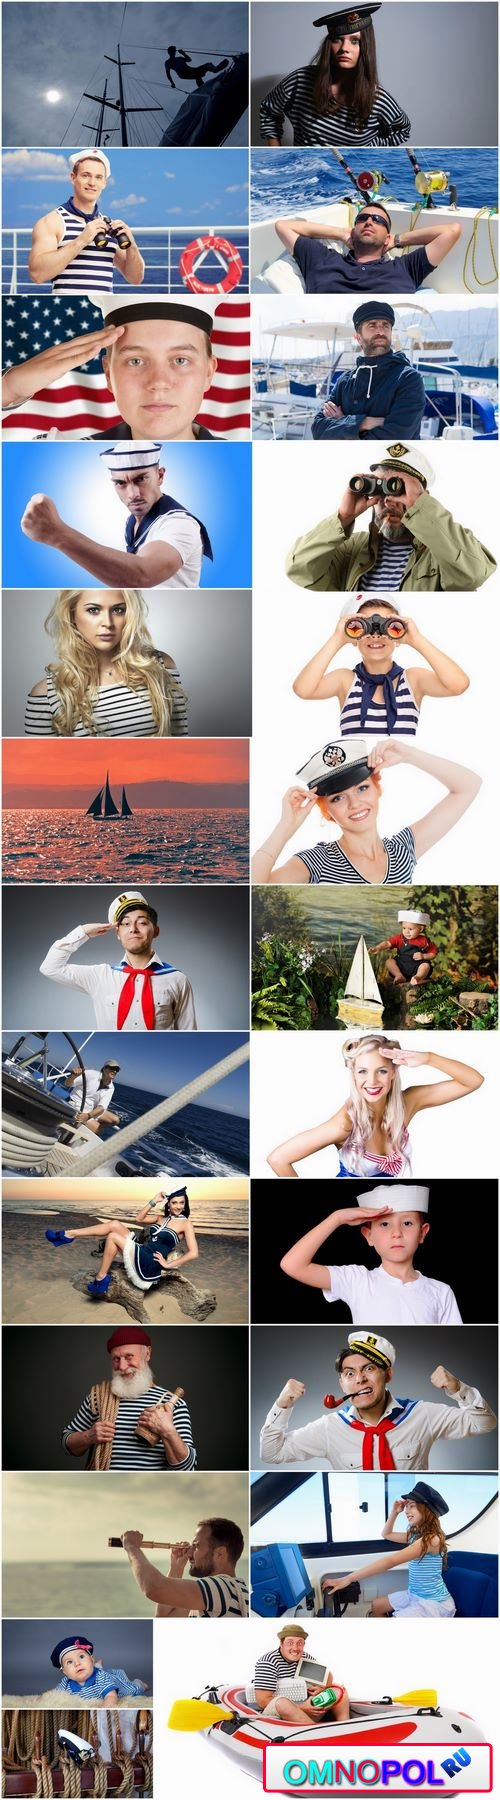 Sailor seaman captain ship boat tourist traveler 25 HQ Jpeg